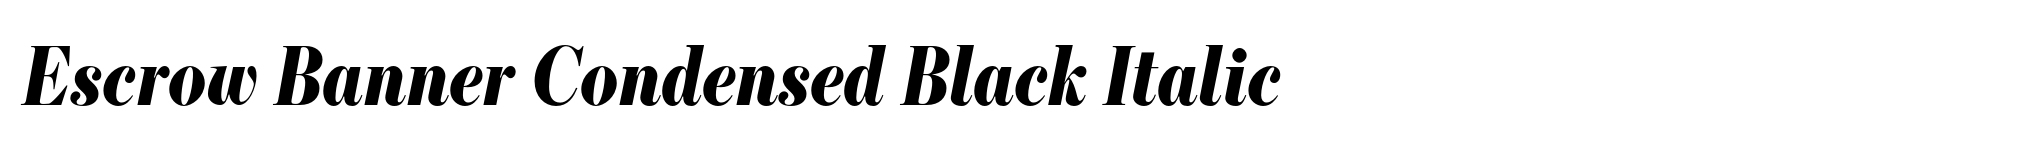 Escrow Banner Condensed Black Italic image